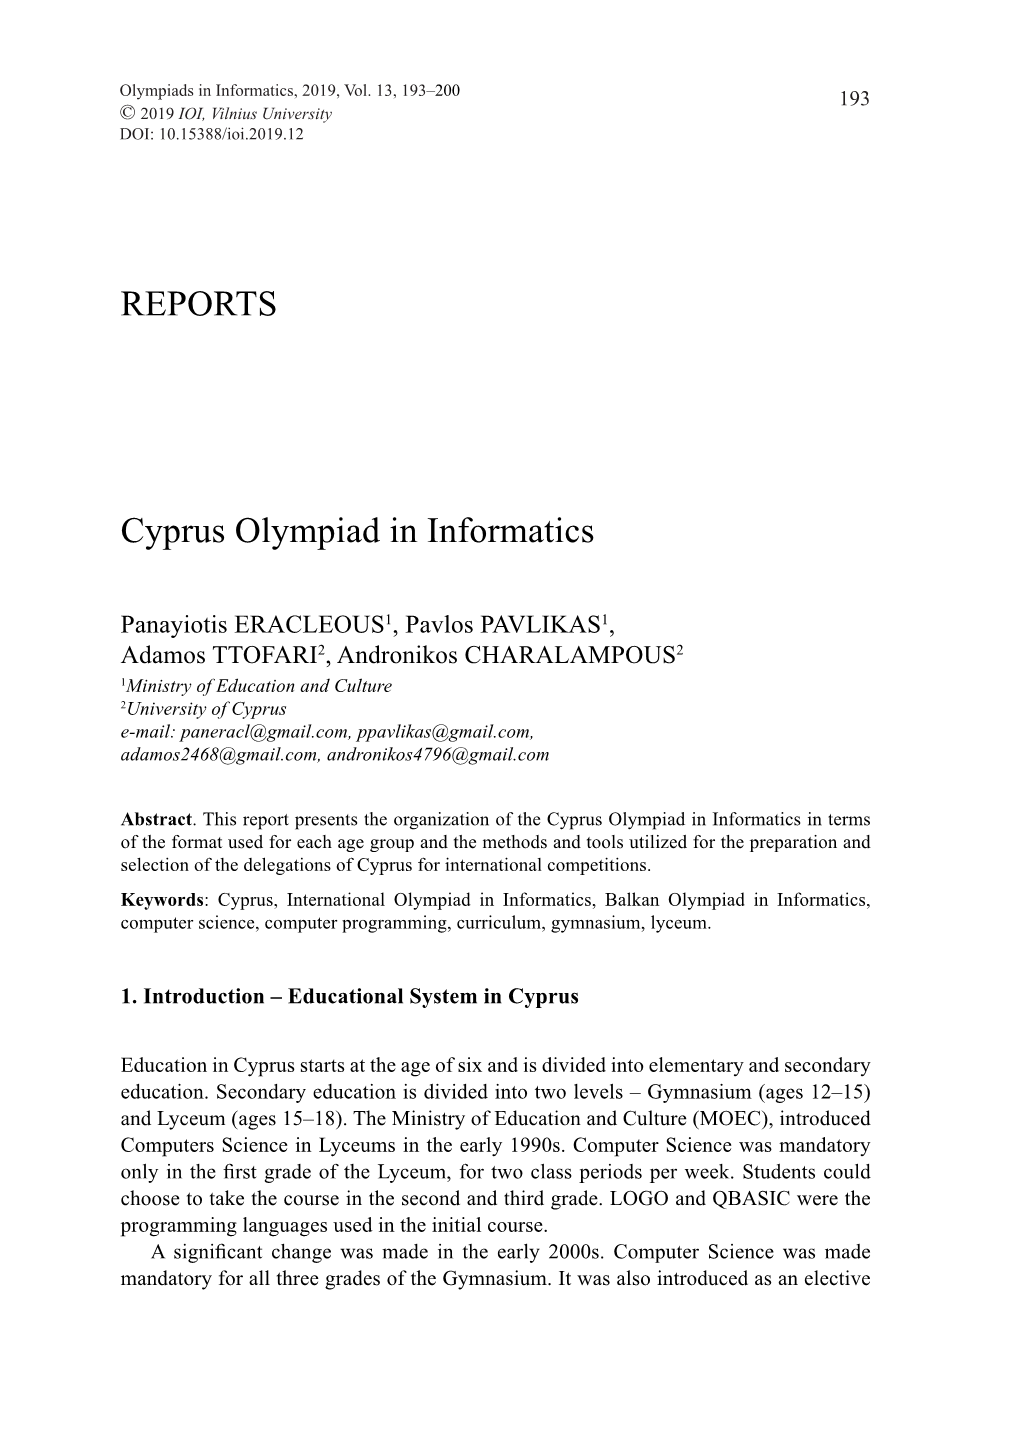 REPORTS Cyprus Olympiad in Informatics